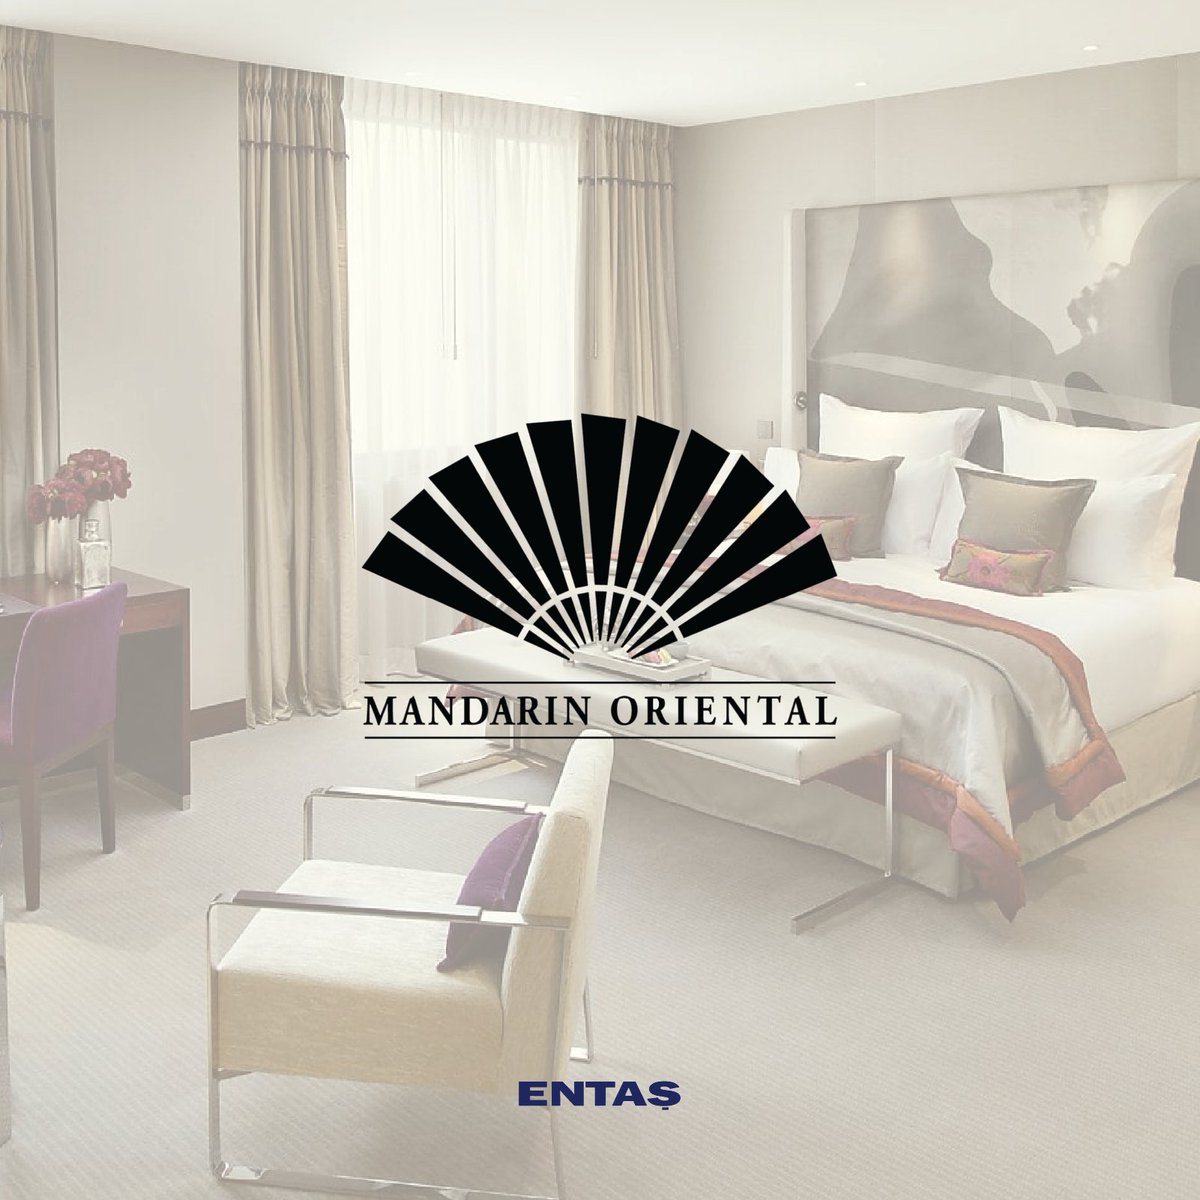 Mandarin Oriental Paris will enchant you with its prestigious central location in the city and its elegant French aesthetics.
#MandarinOrientalParis